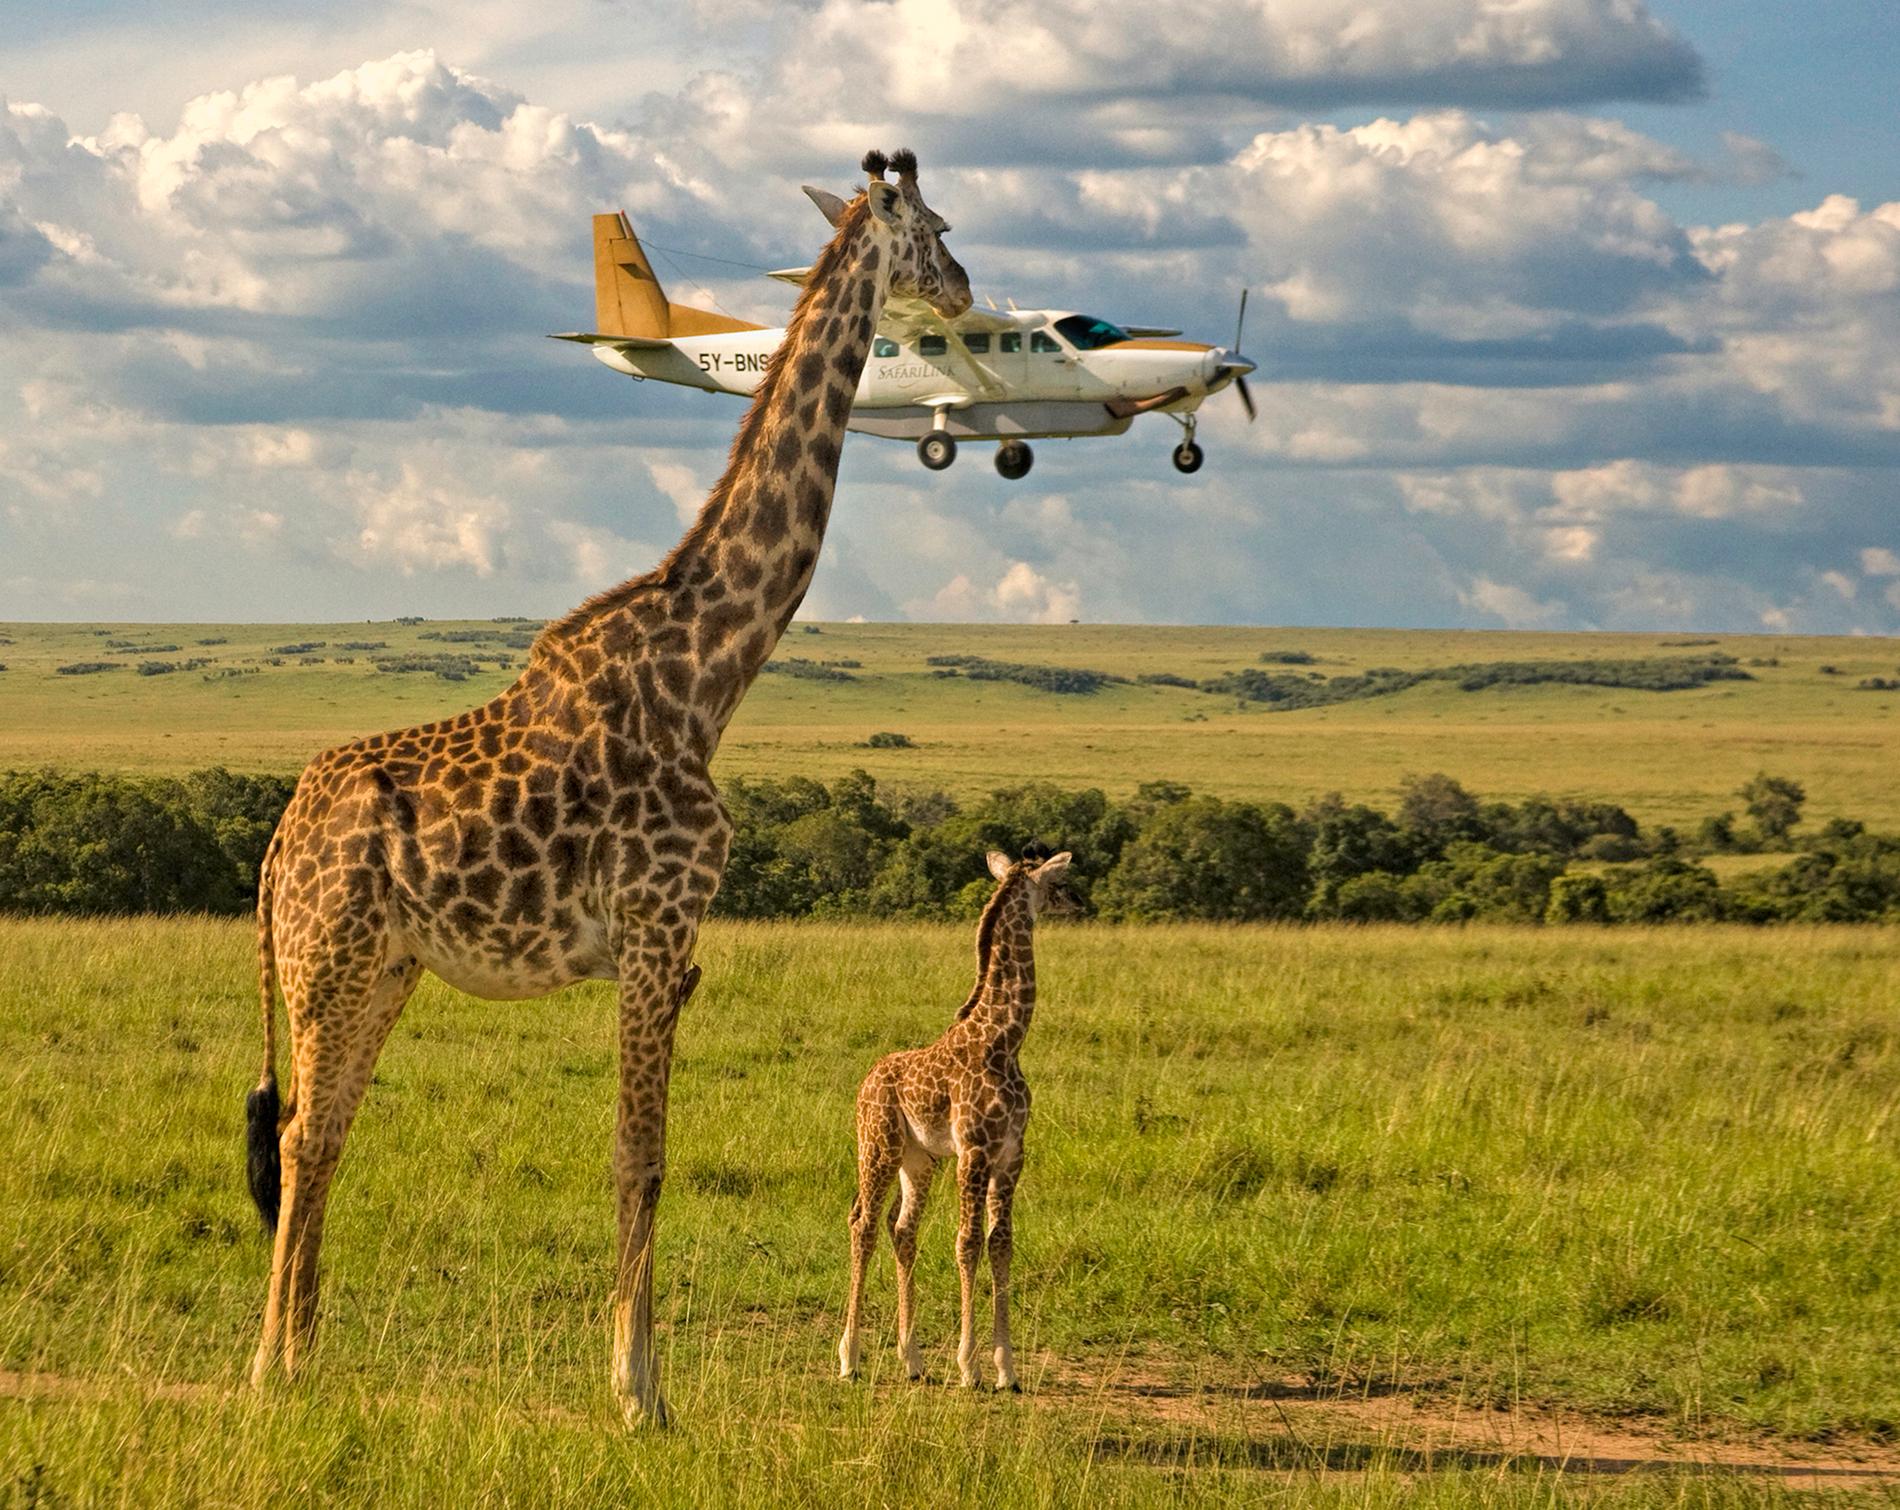 HALSBRYTANDE En giraff extrajobbar som flygledare i Masal Mara, Kenya. Graeme Guy tog bilden.